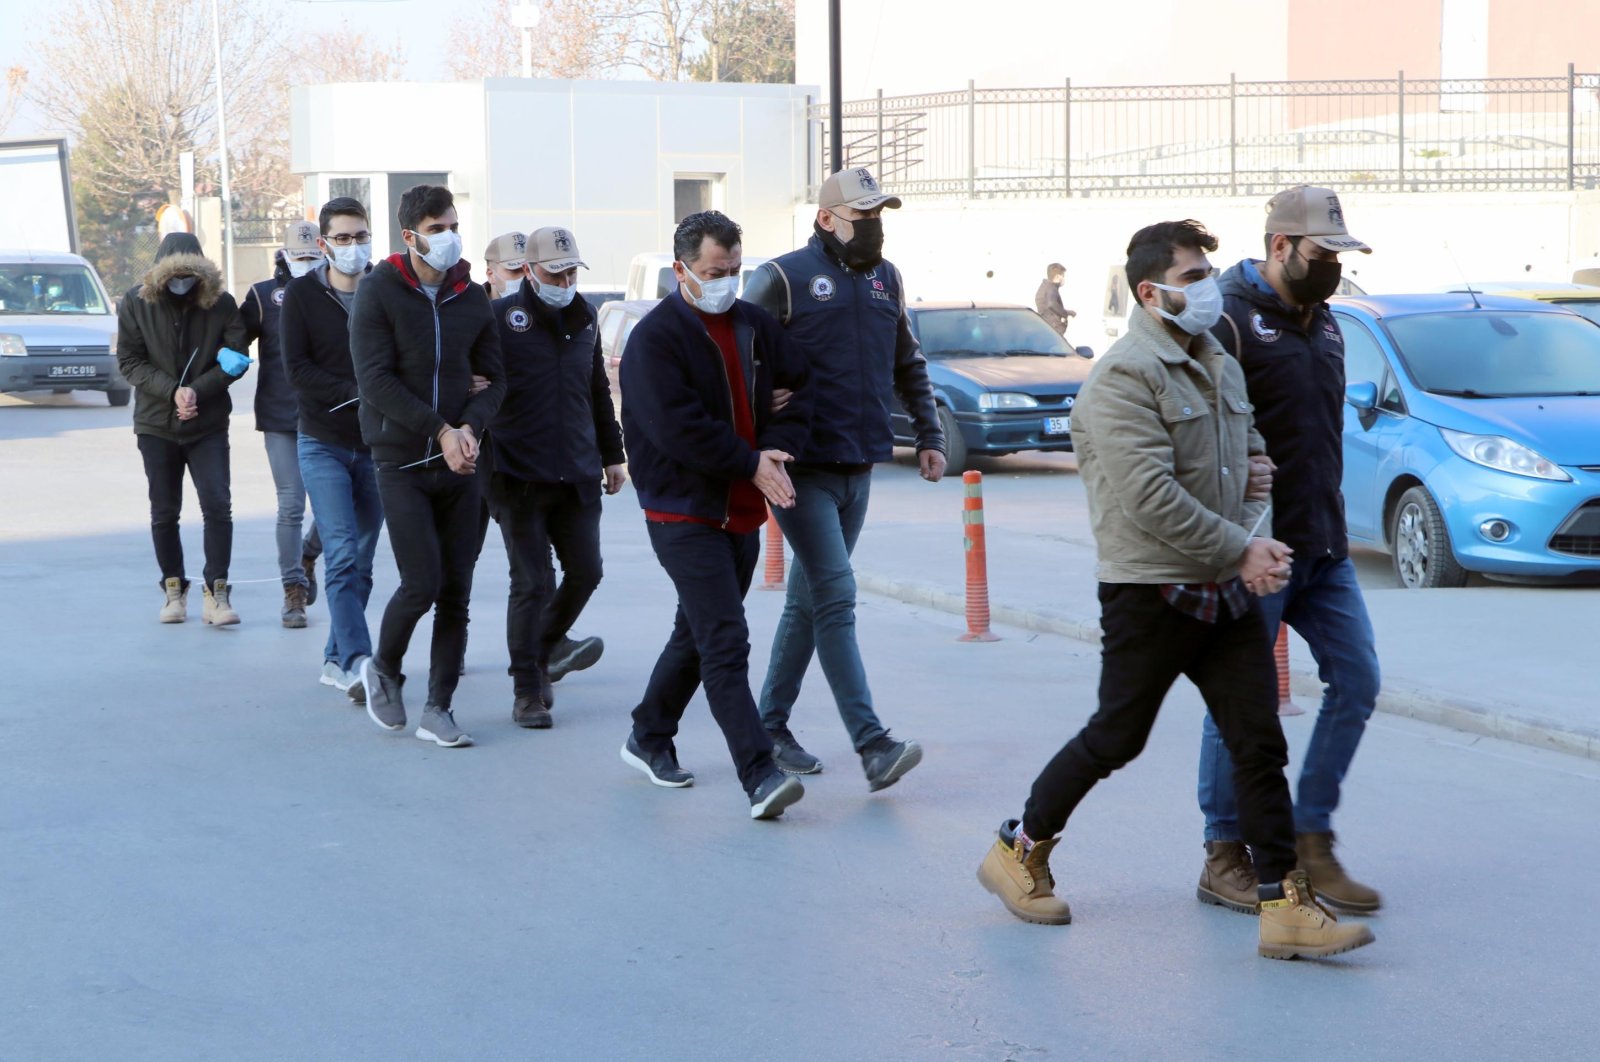 Police escort captured FETÖ suspects to the police station in Eskişehir, central Turkey, Dec. 4, 2020. (DHA Photo)